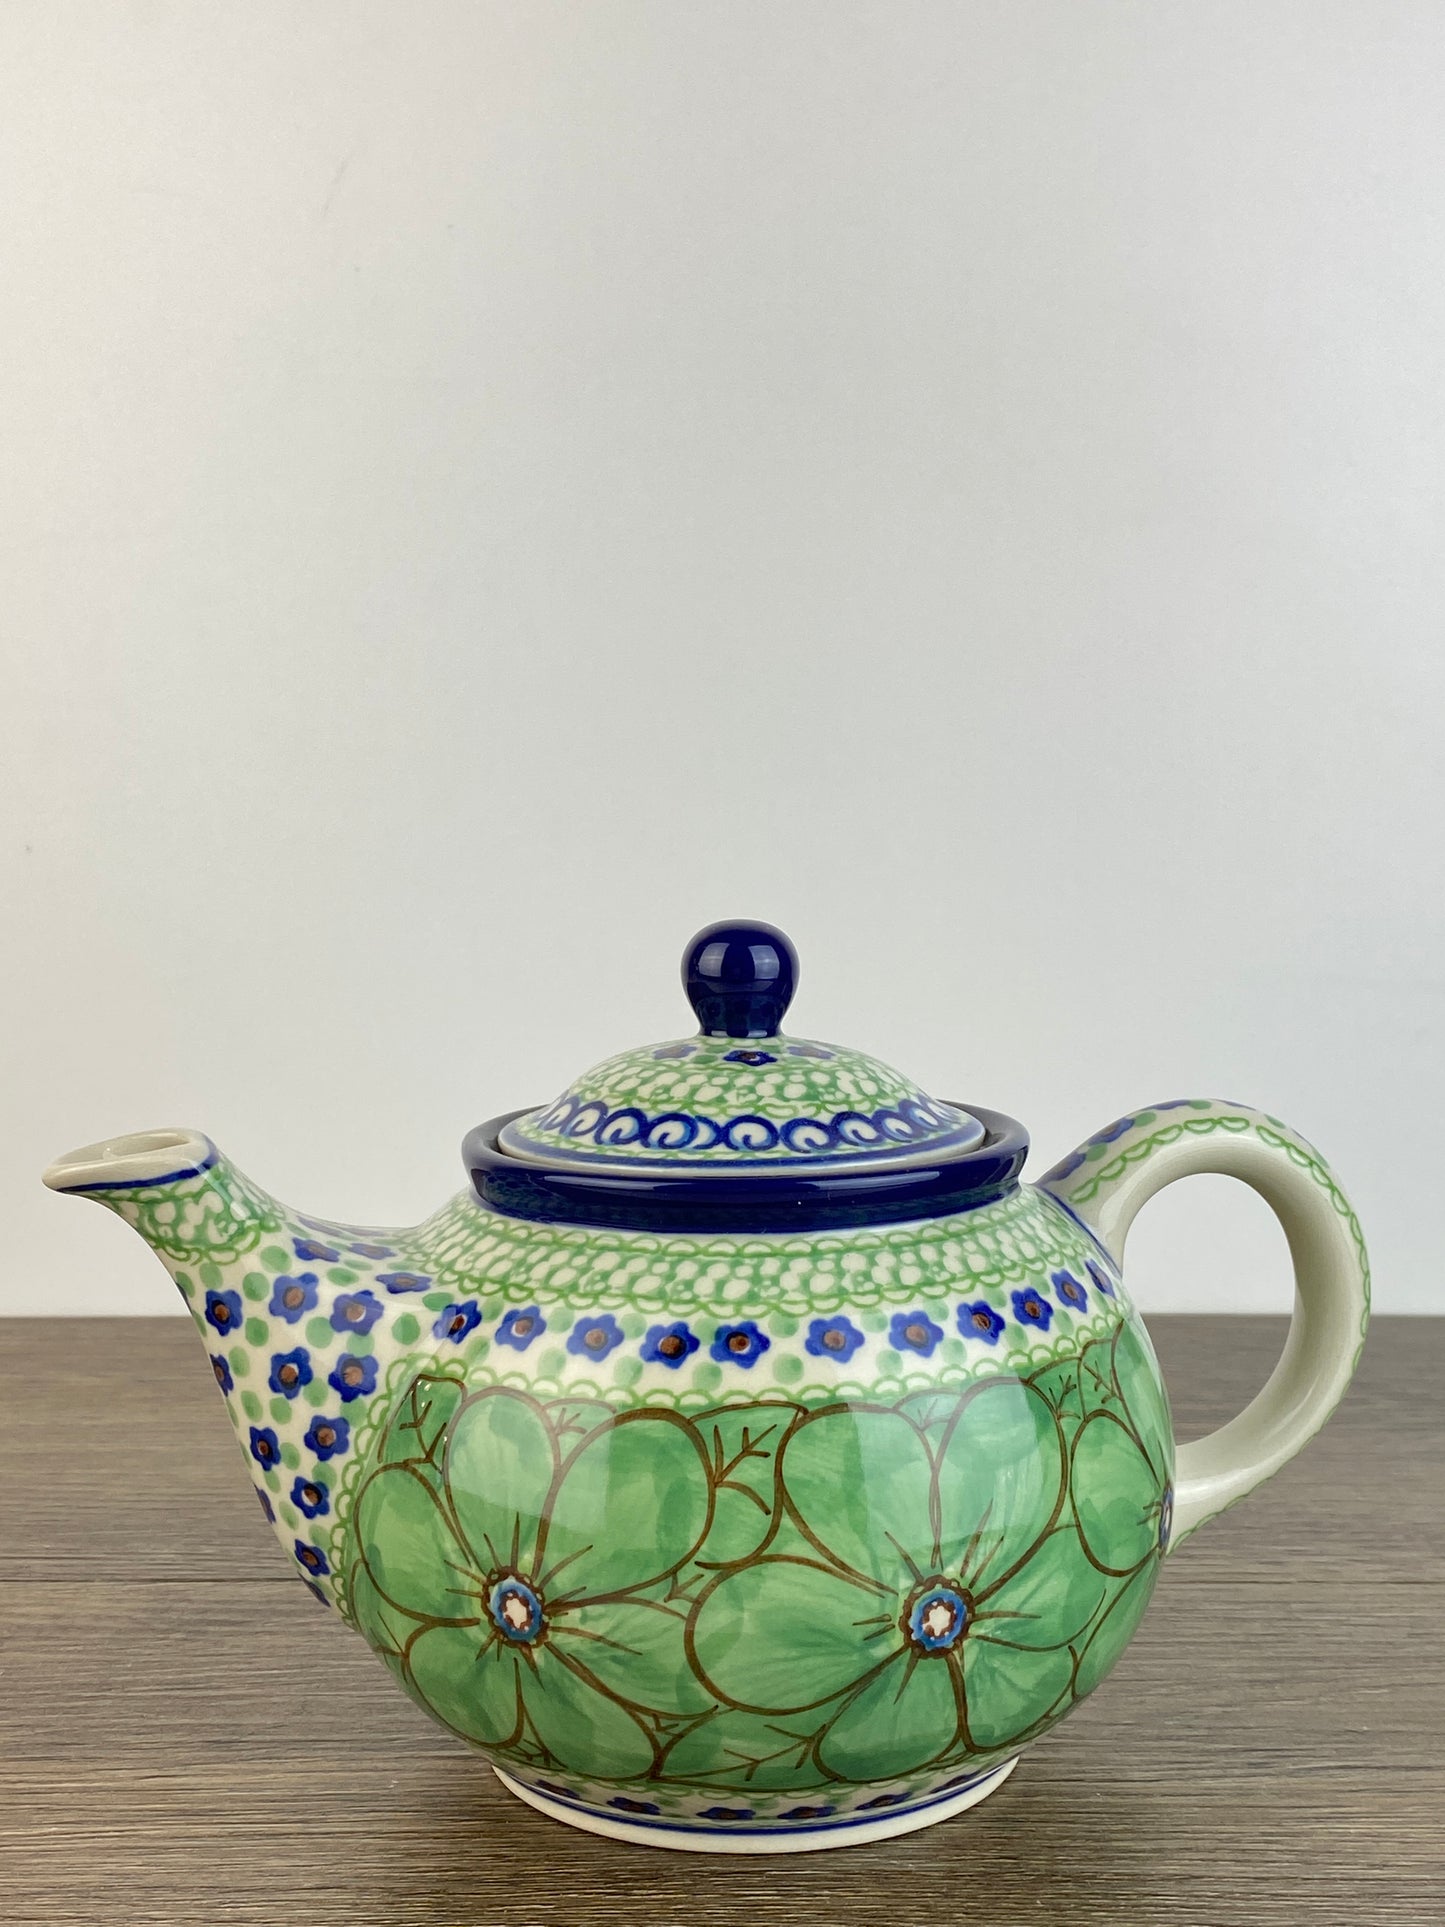 3 Cup Unikat Teapot - Shape 264 - Pattern U408D